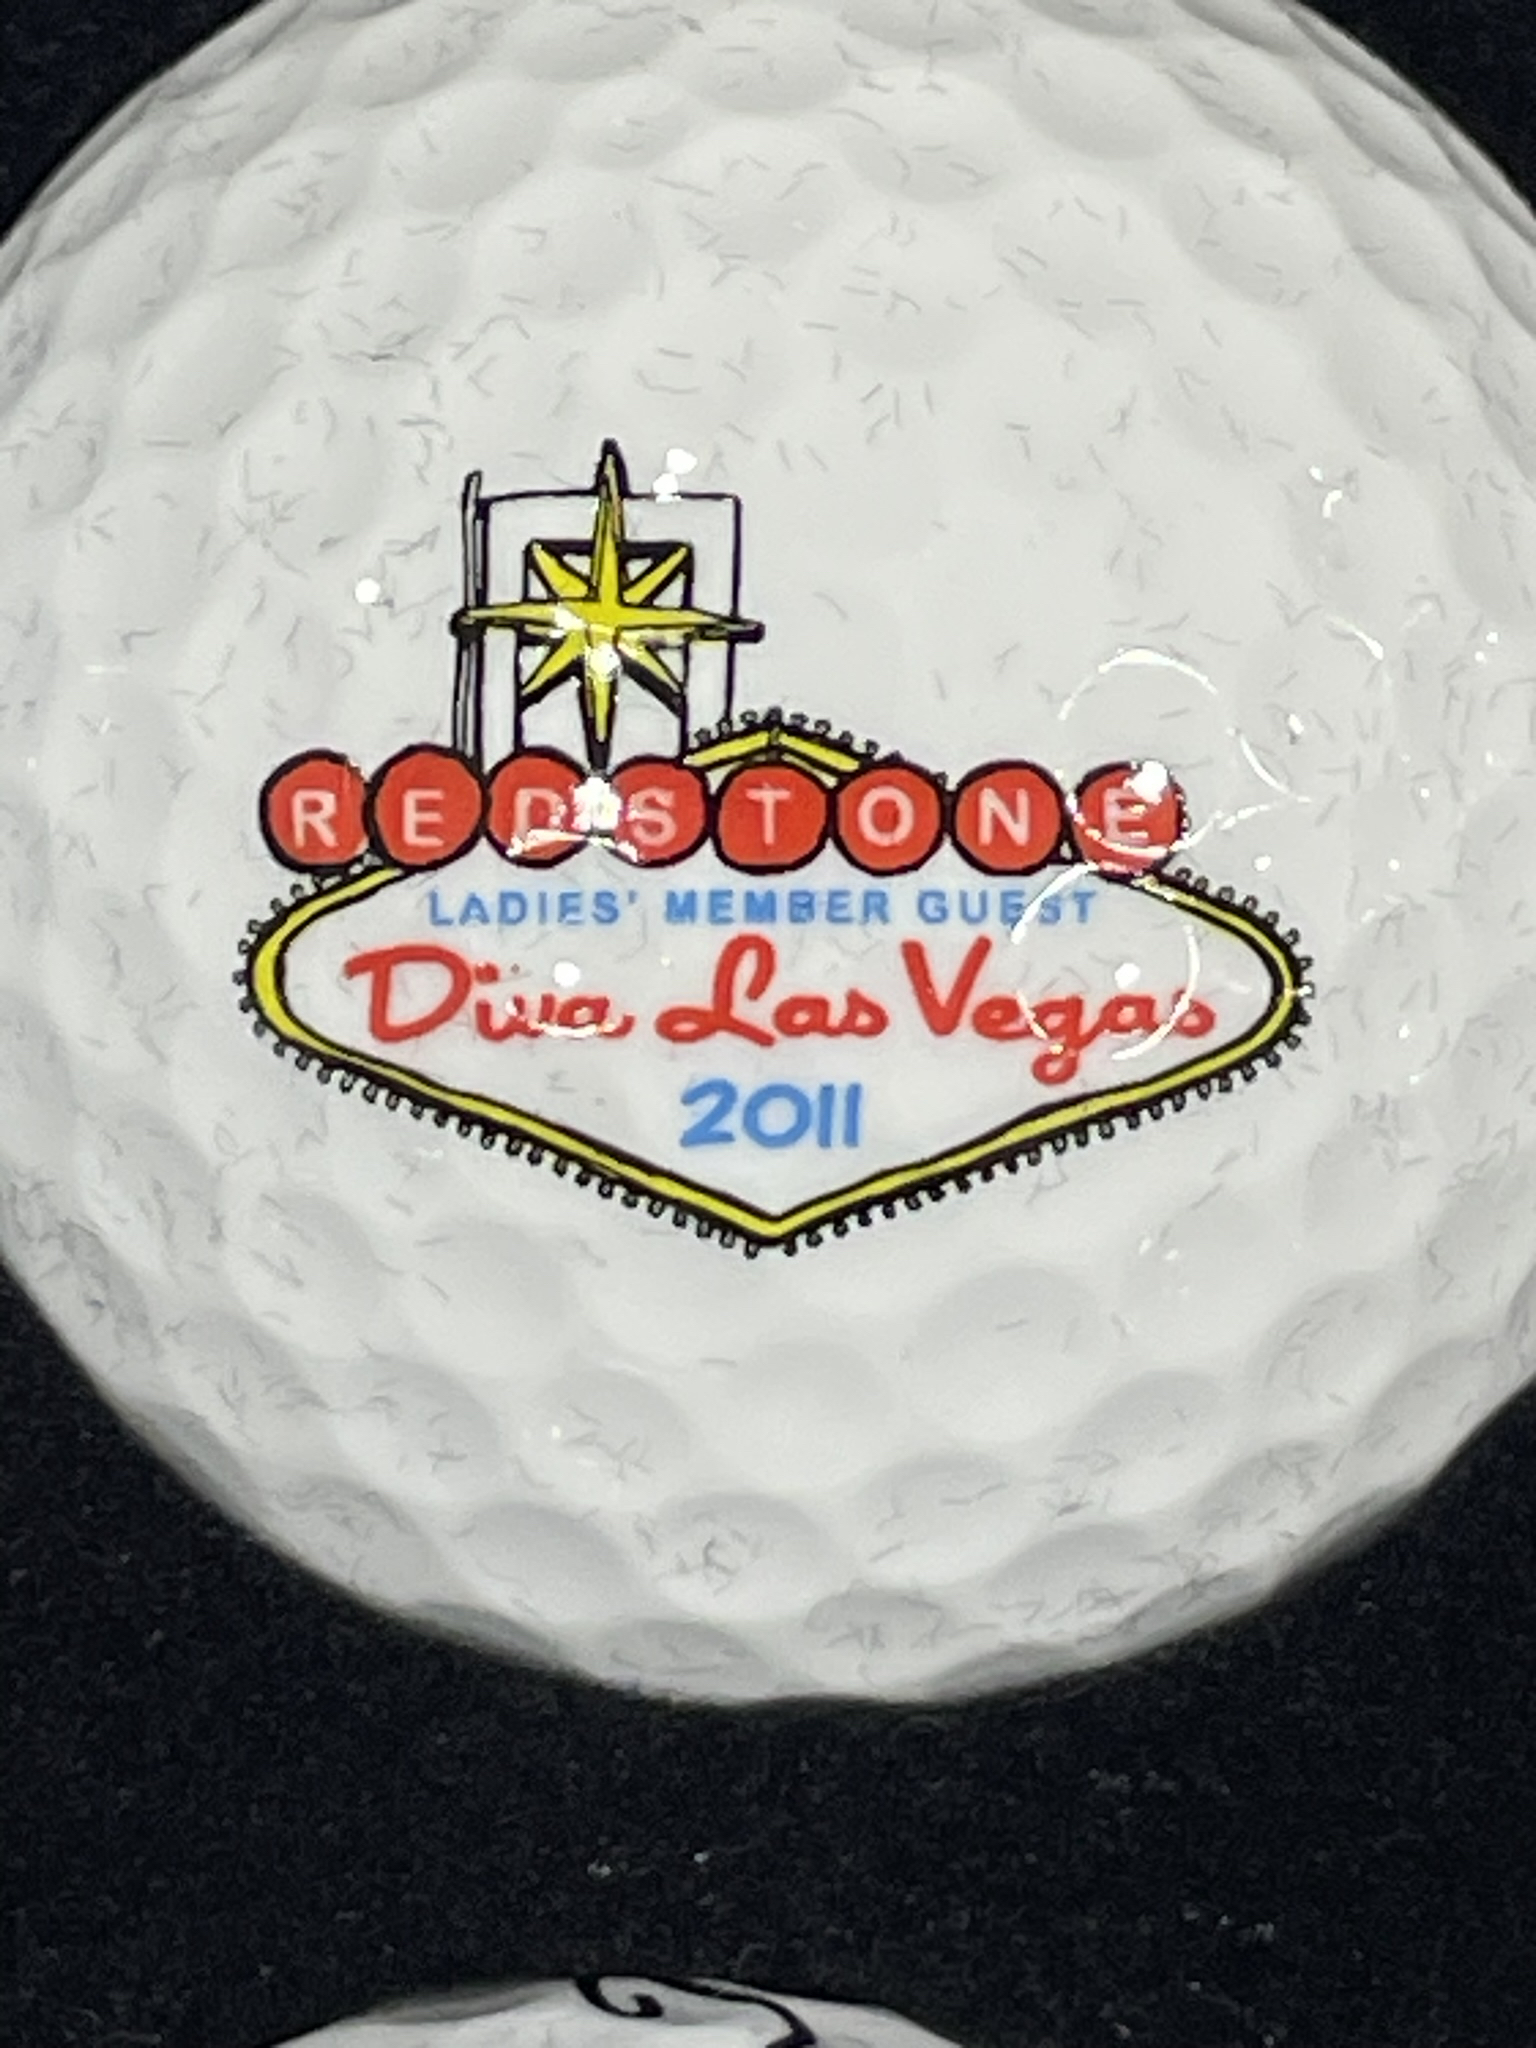 Titleist golf balls, Diva Las Vegas 2011